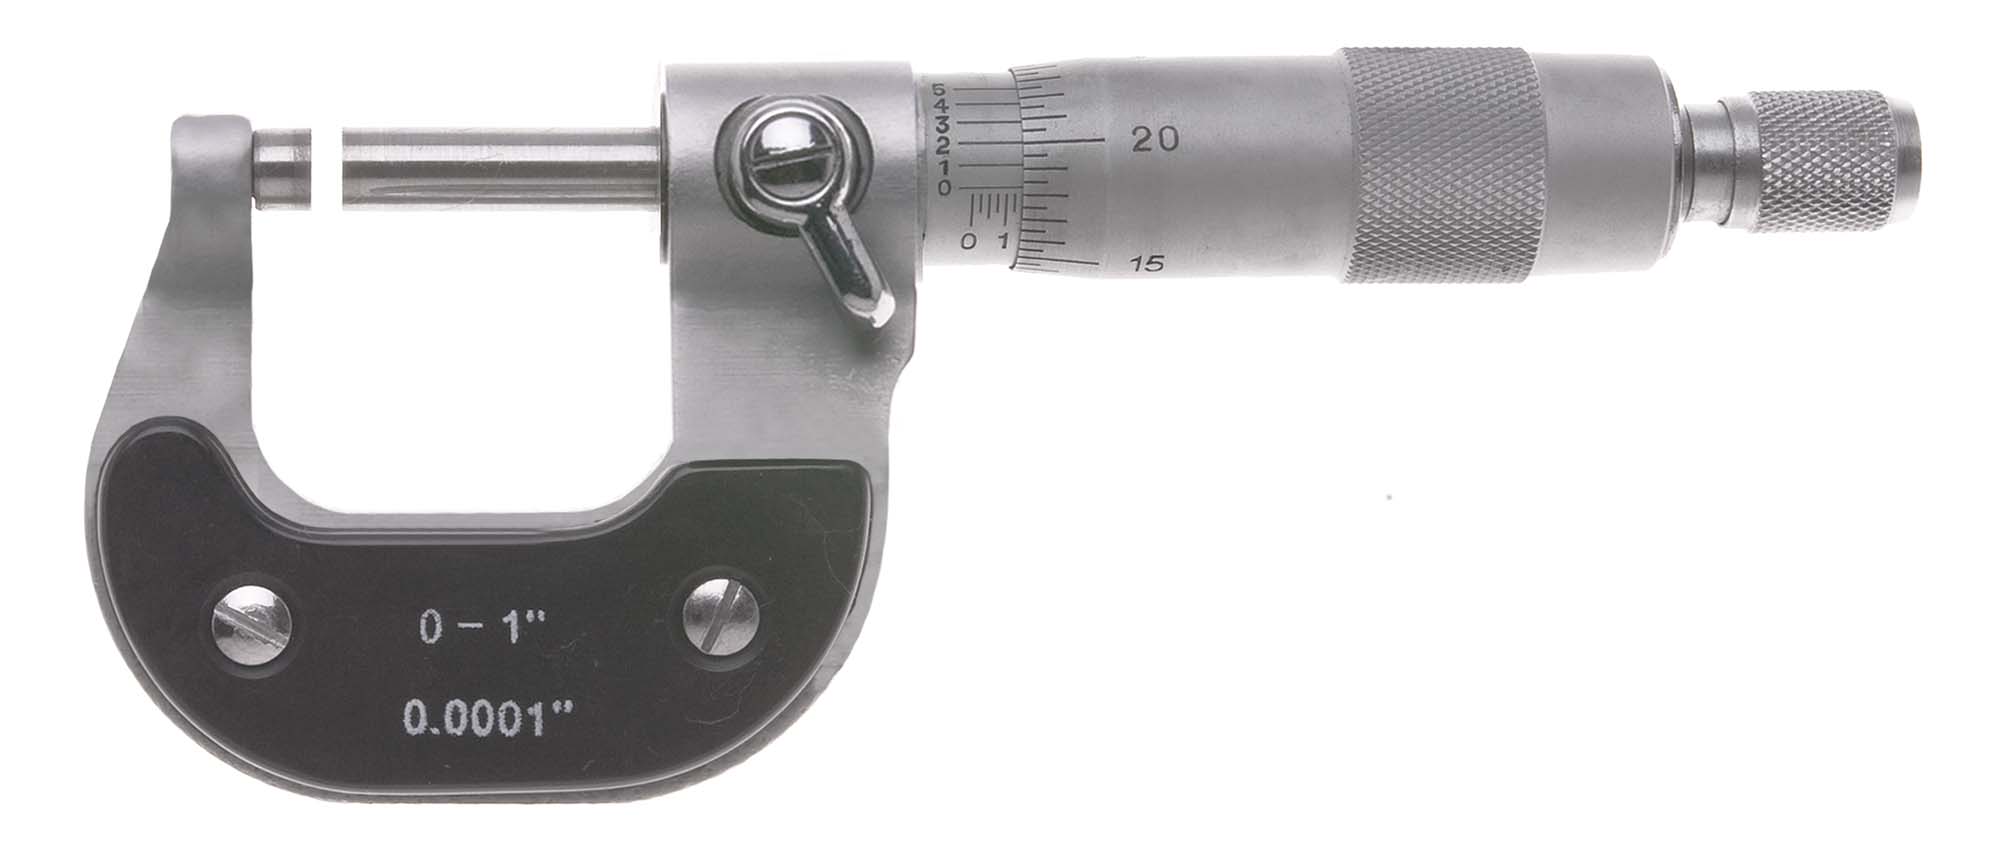 VME-05  4-5" VME Outside Micrometer, .0001"